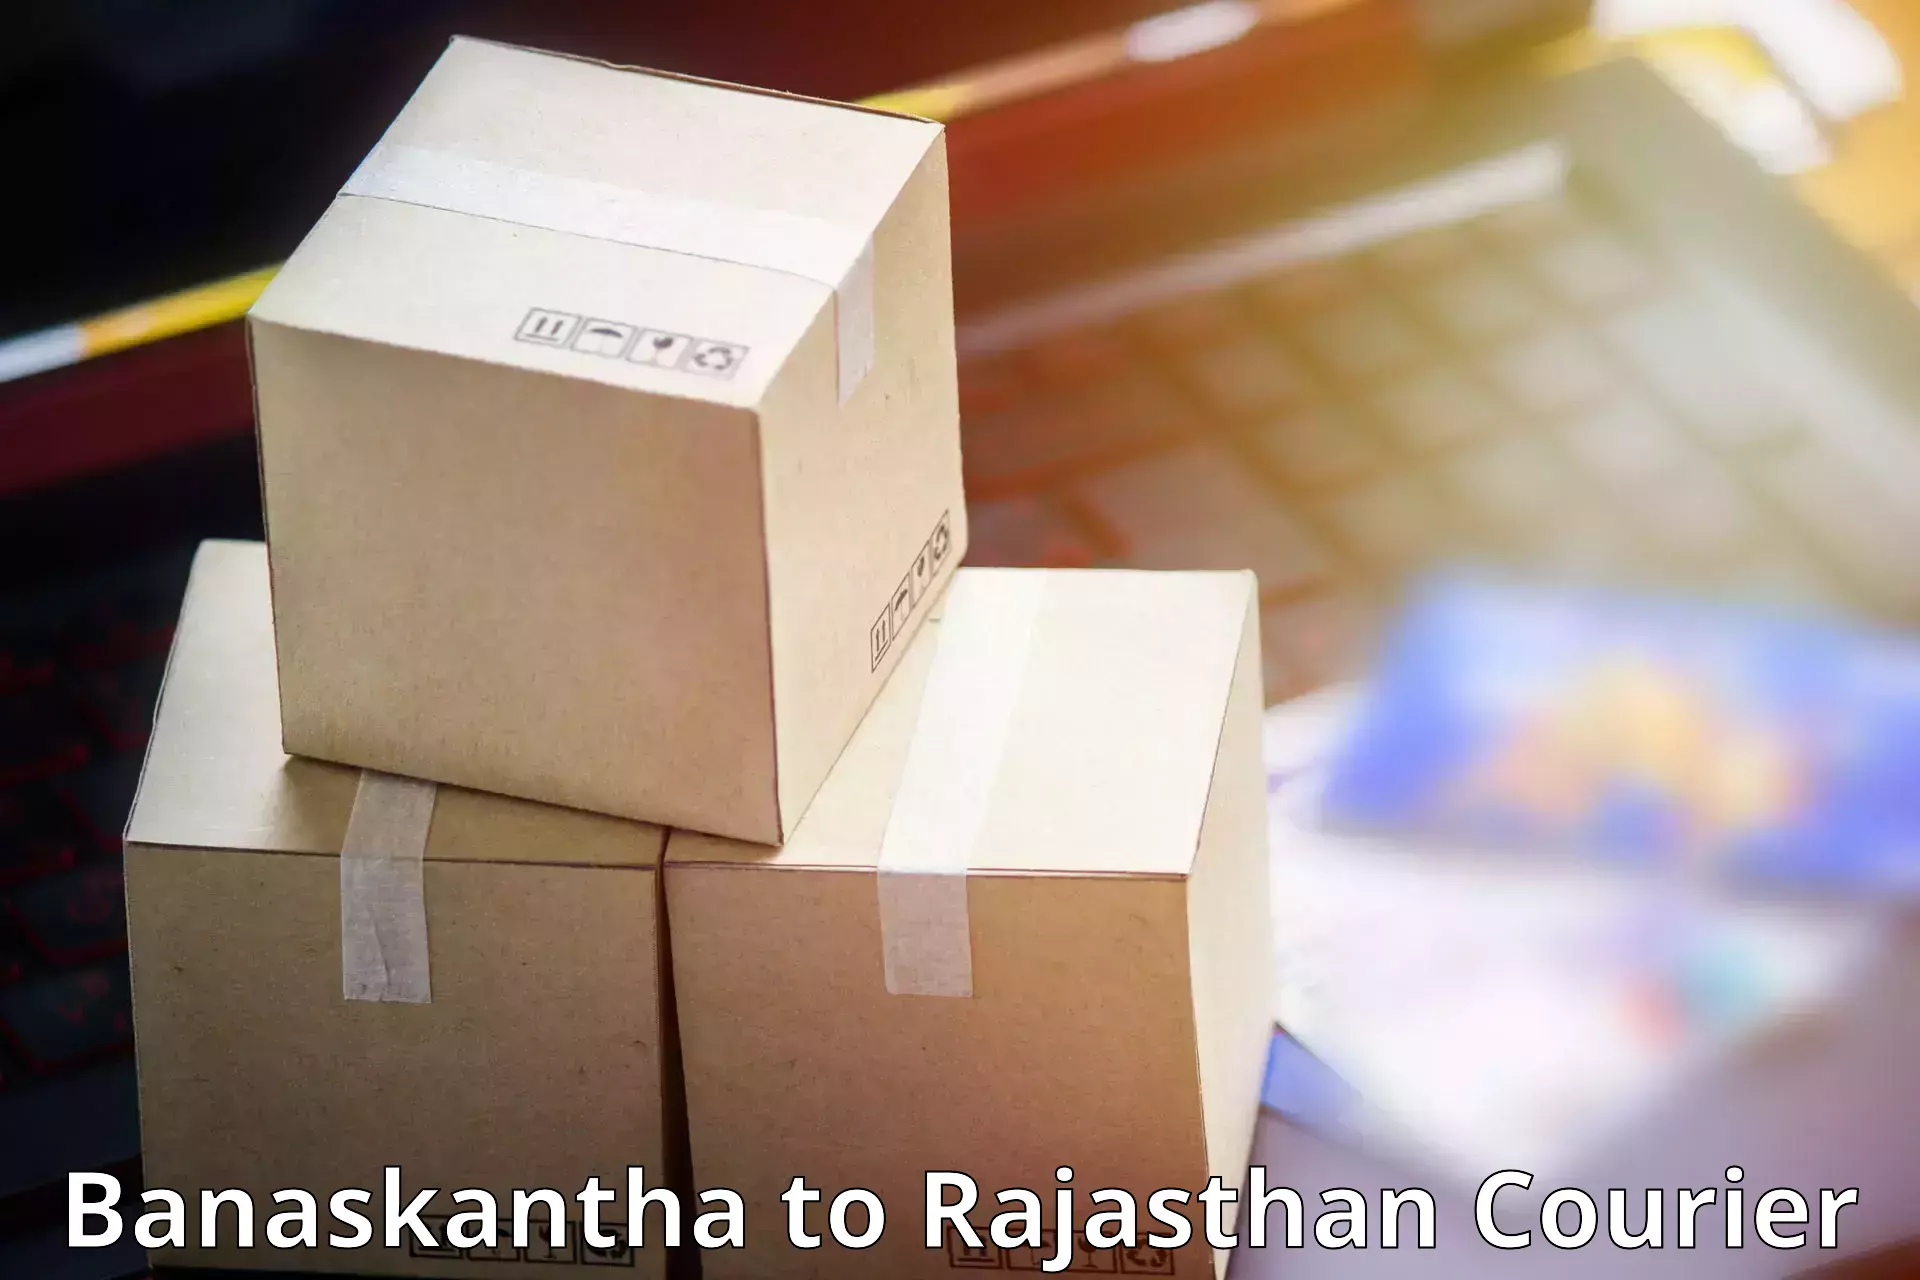 Affordable parcel service Banaskantha to Piparcity